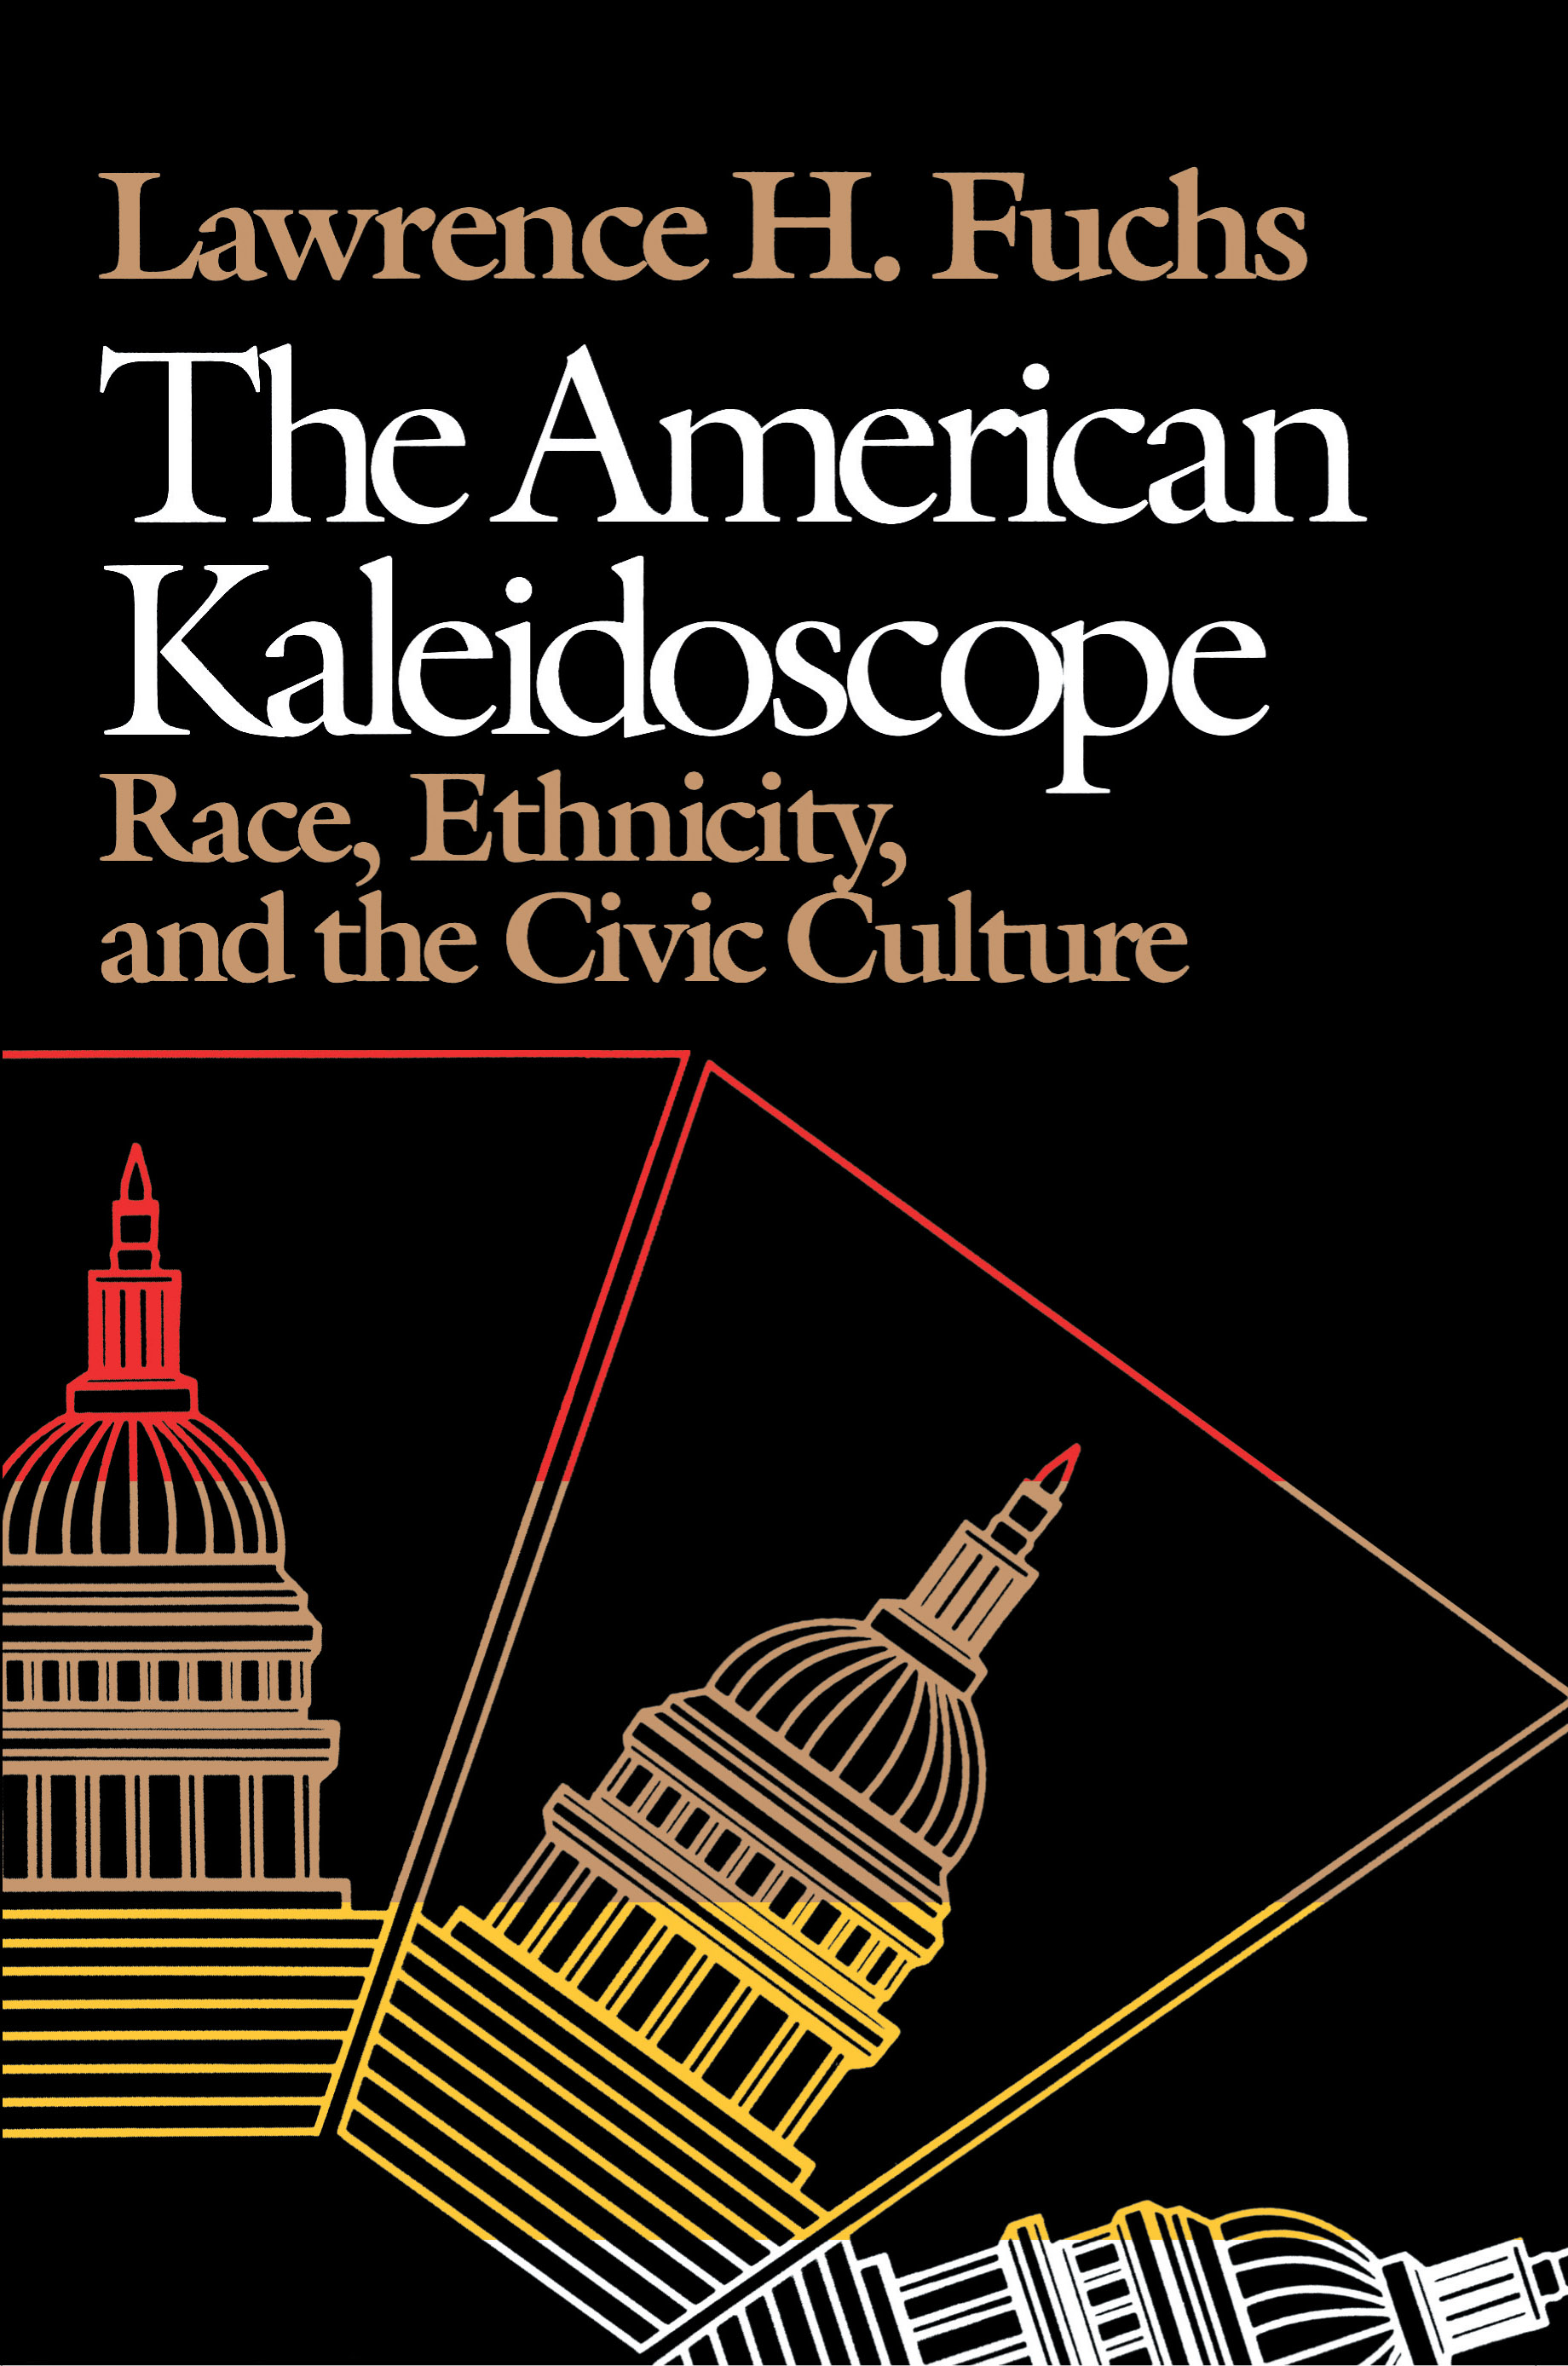 Opening / Kaleidoscope of Culture